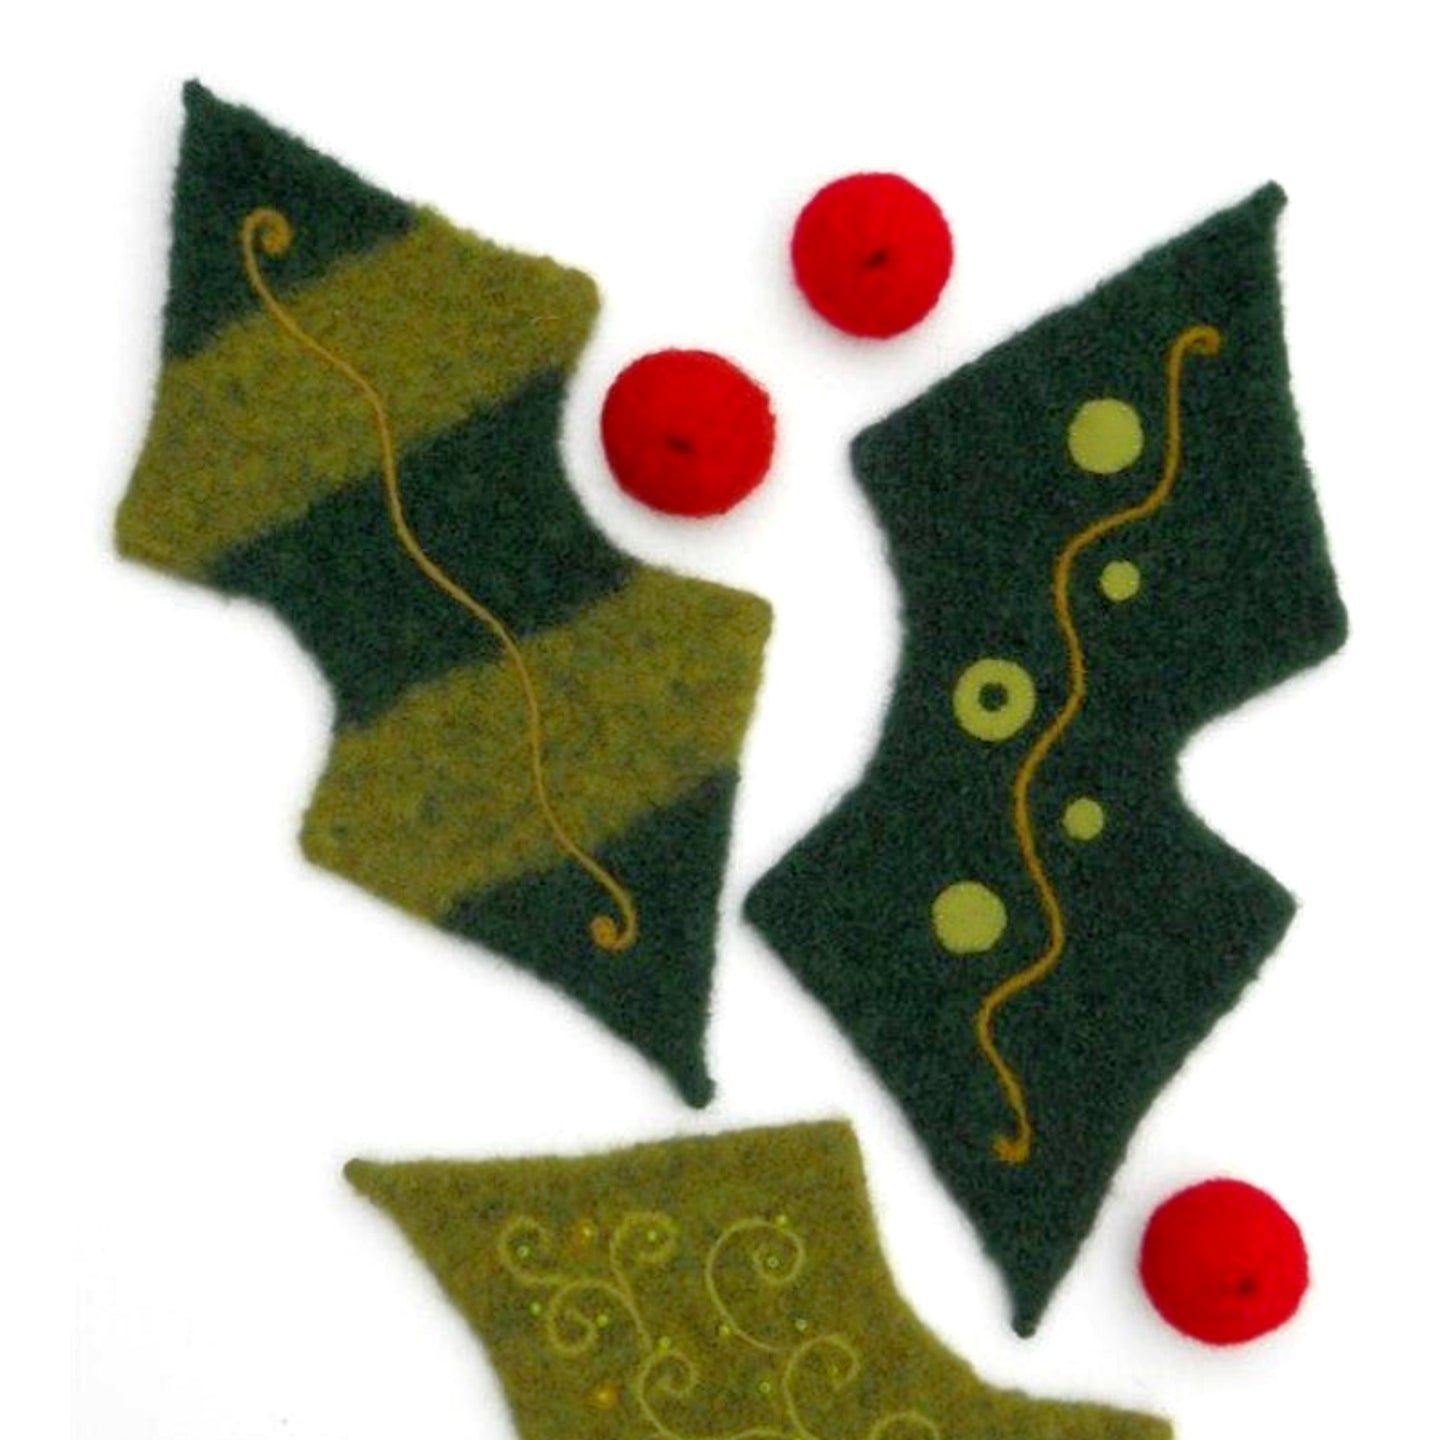 marie mayhew's woolly holly leaf & berries pattern